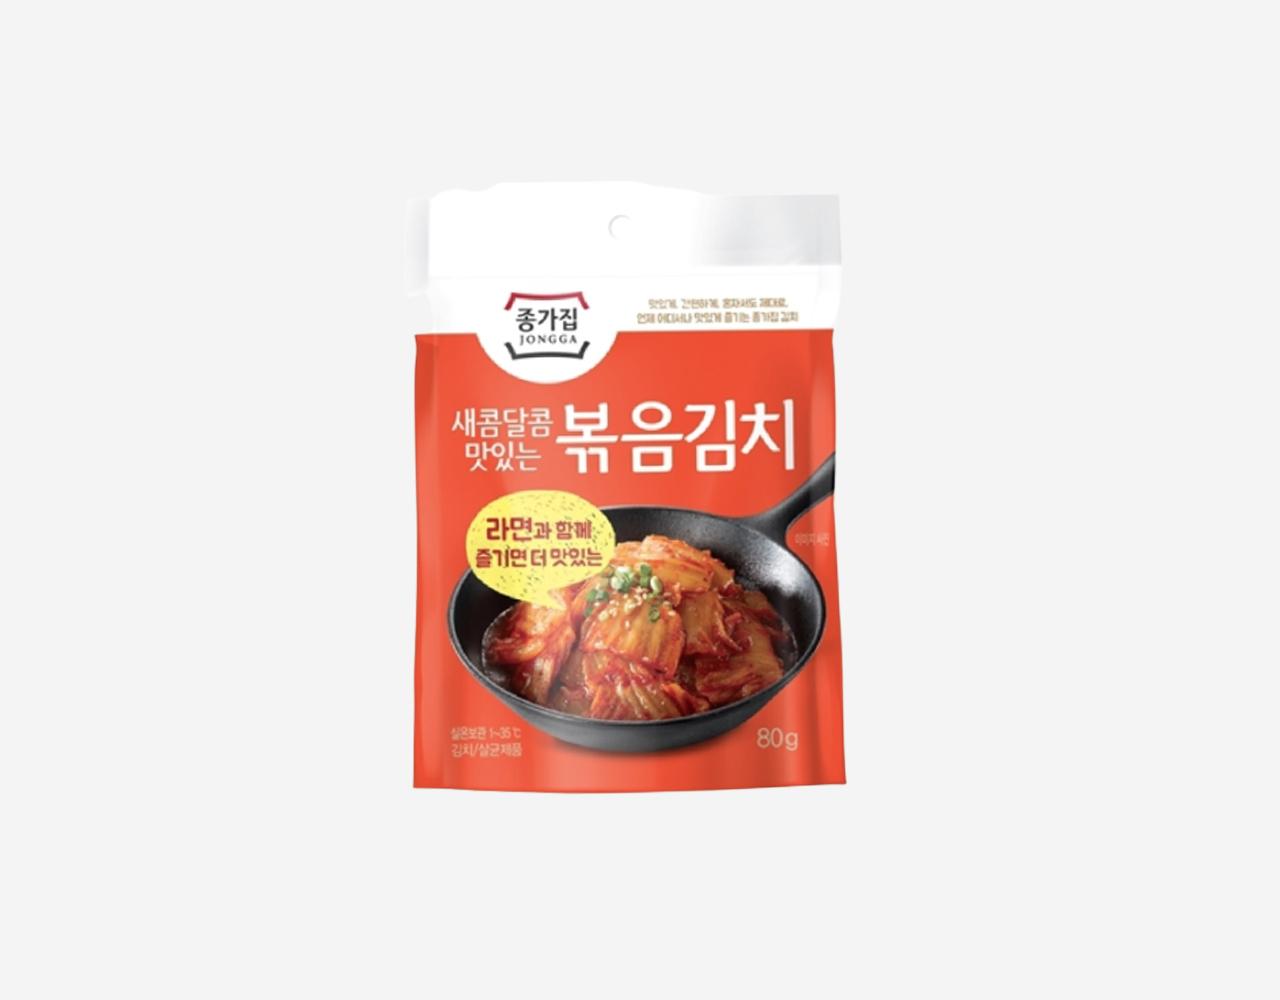 JONGGA Stir-fried Kimchi